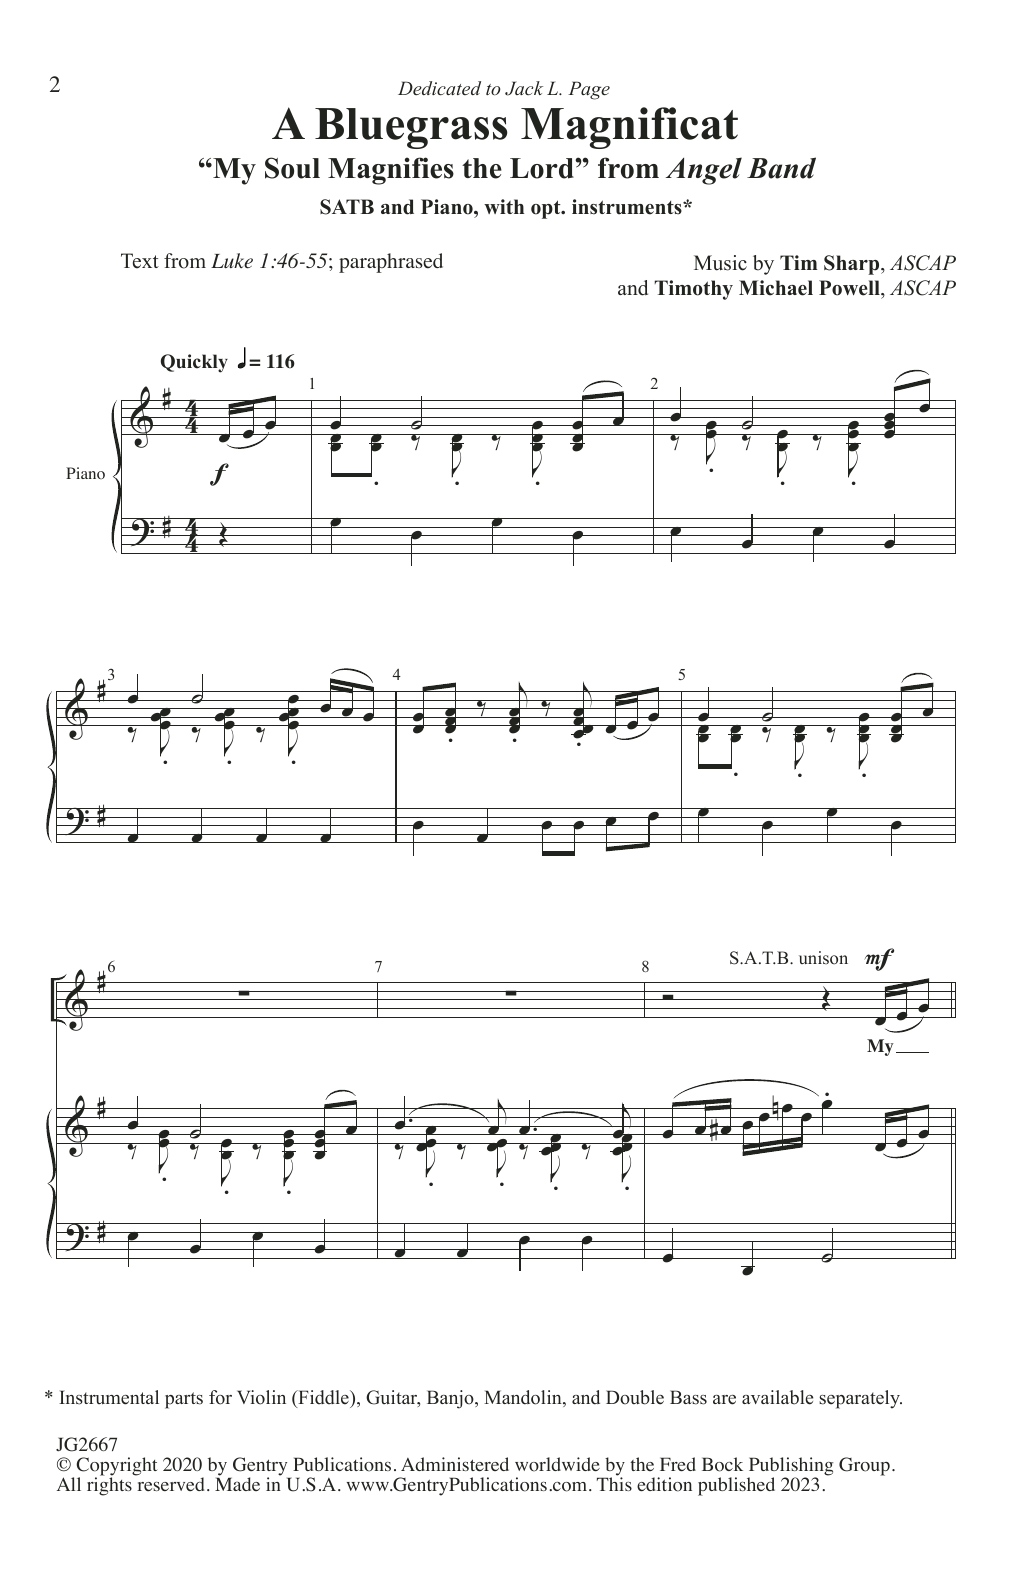 Download Tim Sharp and Timothy Michael Powell A Bluegrass Magnificat Sheet Music